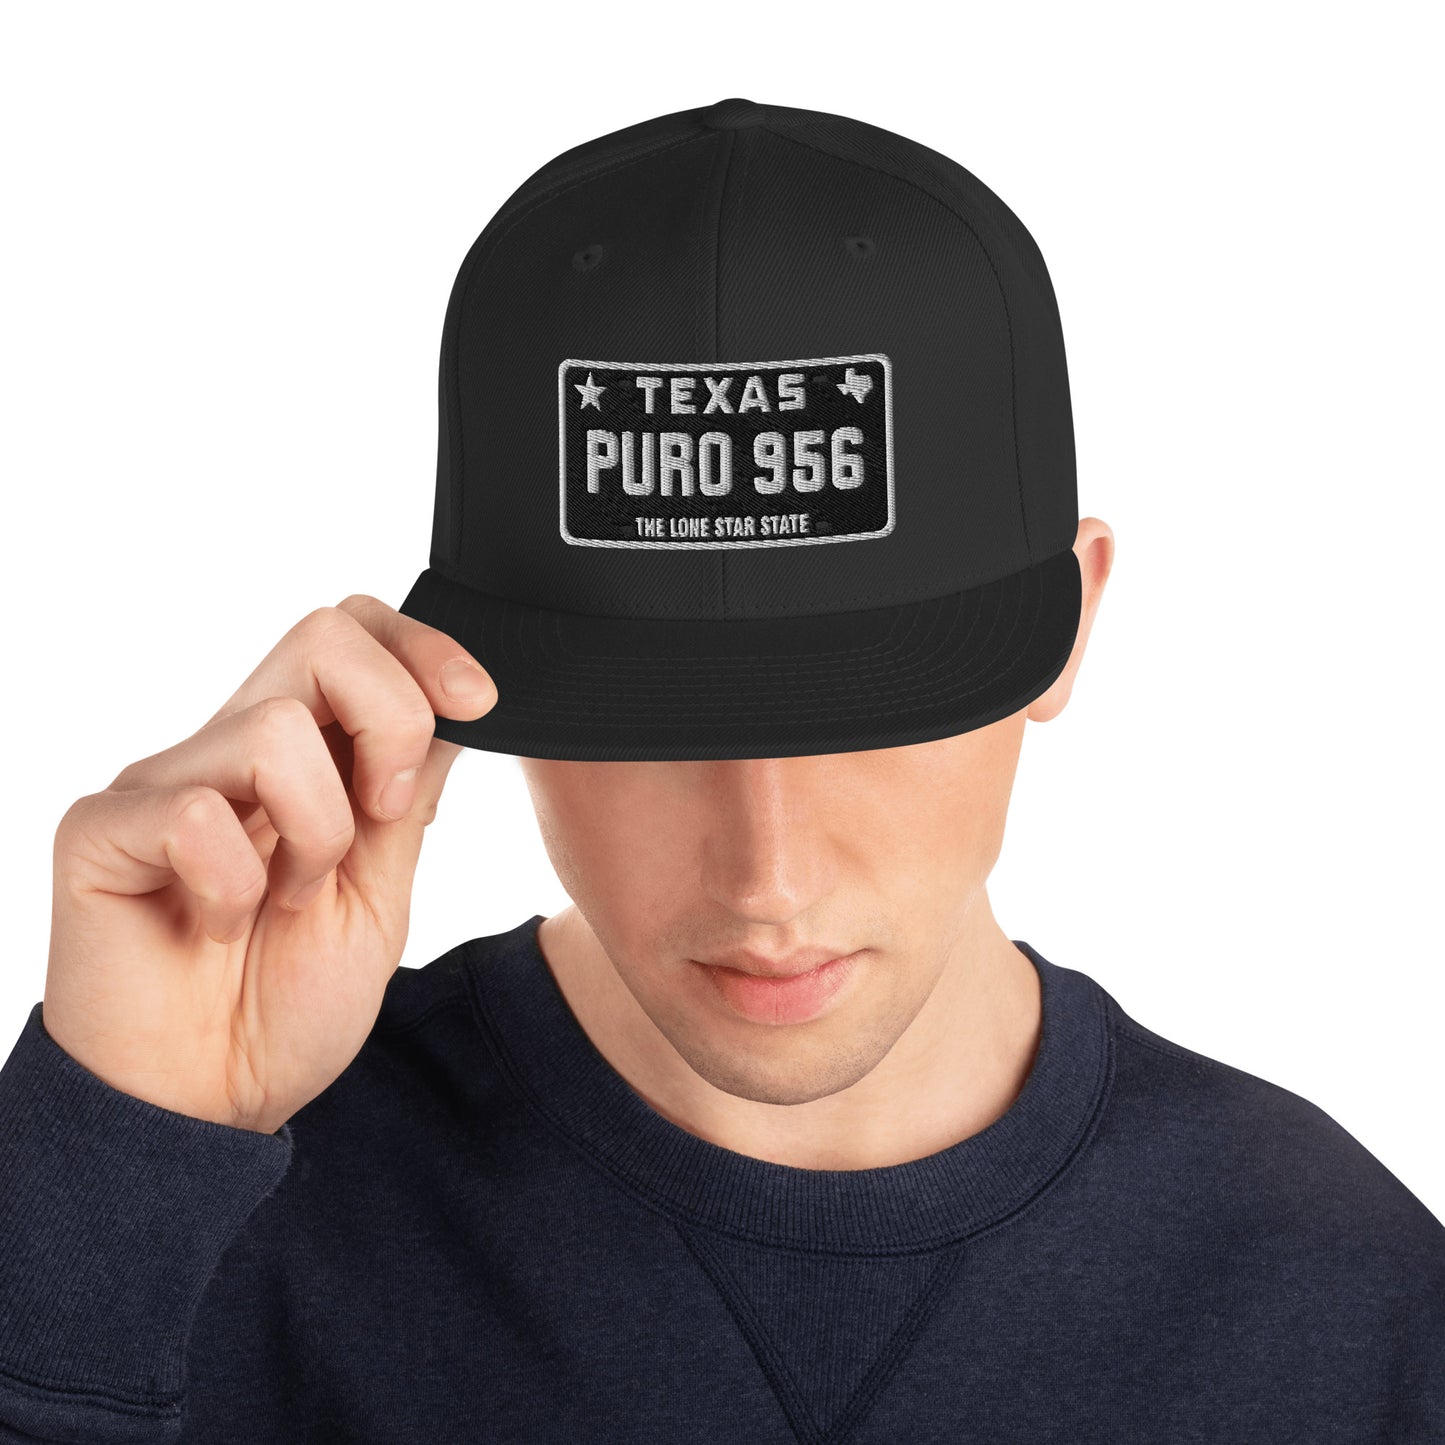 Puro 956 License Plate Snapback Hat